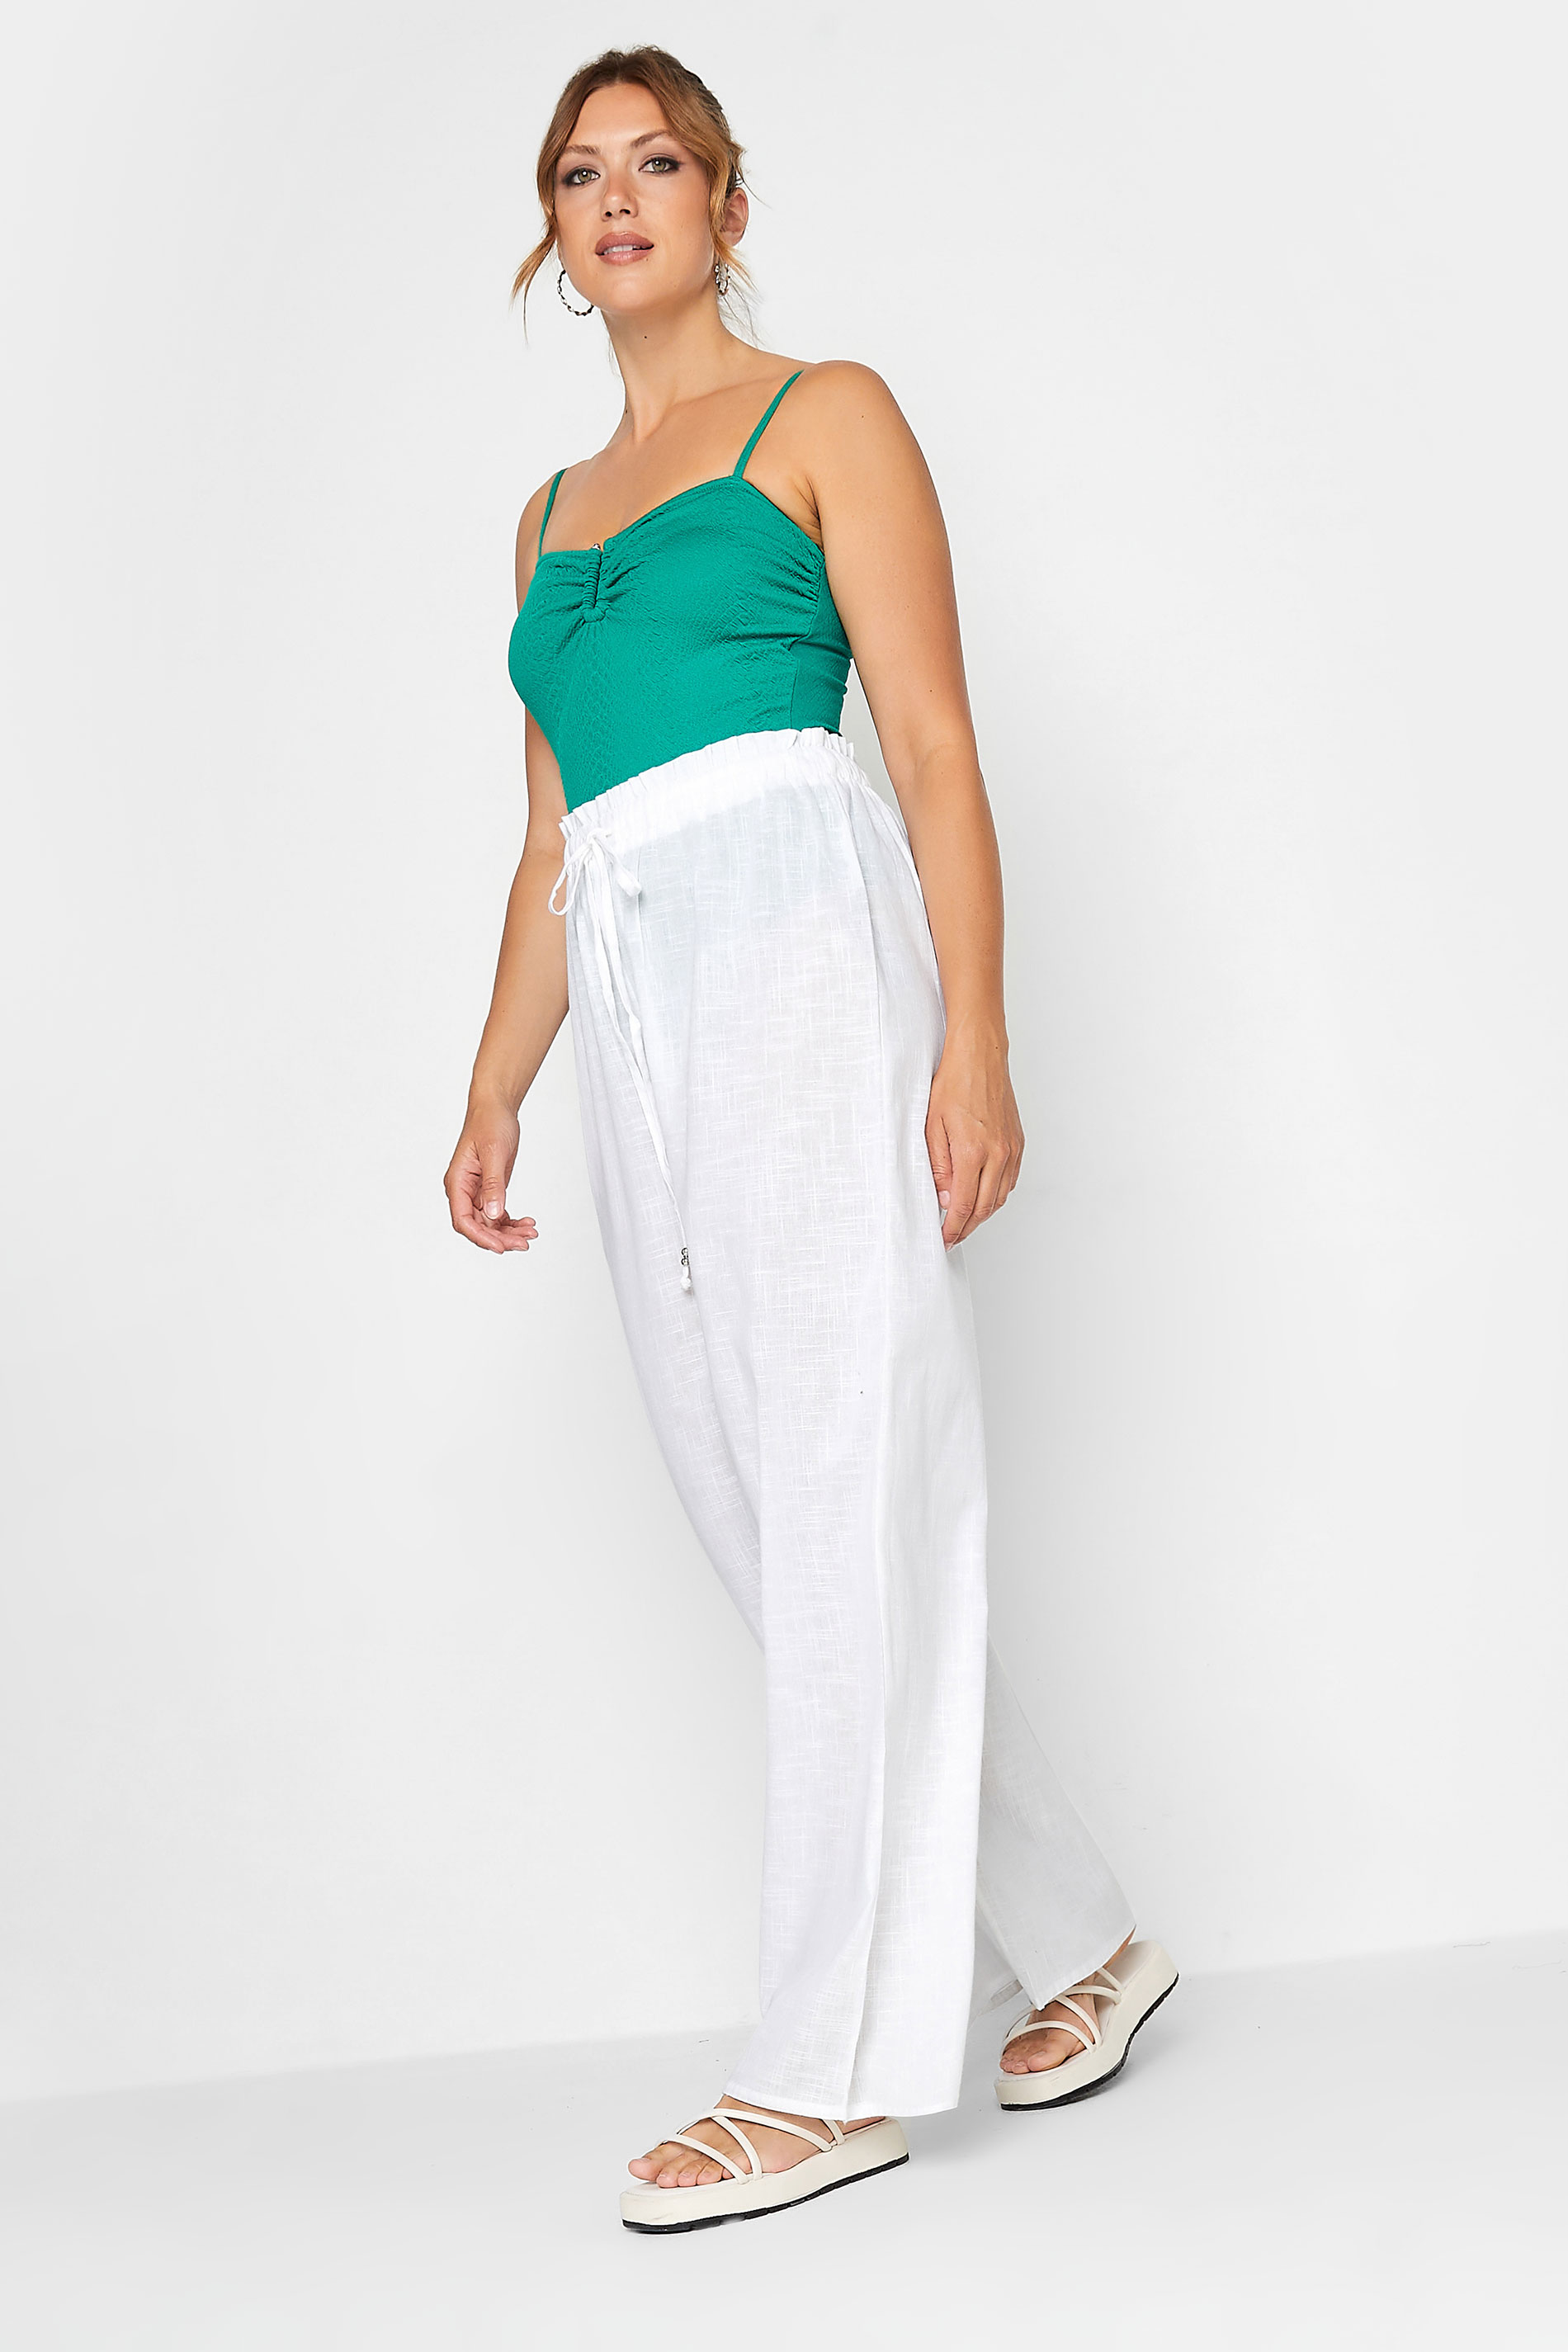 LTS Tall Women's White Cotton Wide Leg Beach Trousers | Long Tall Sally  2